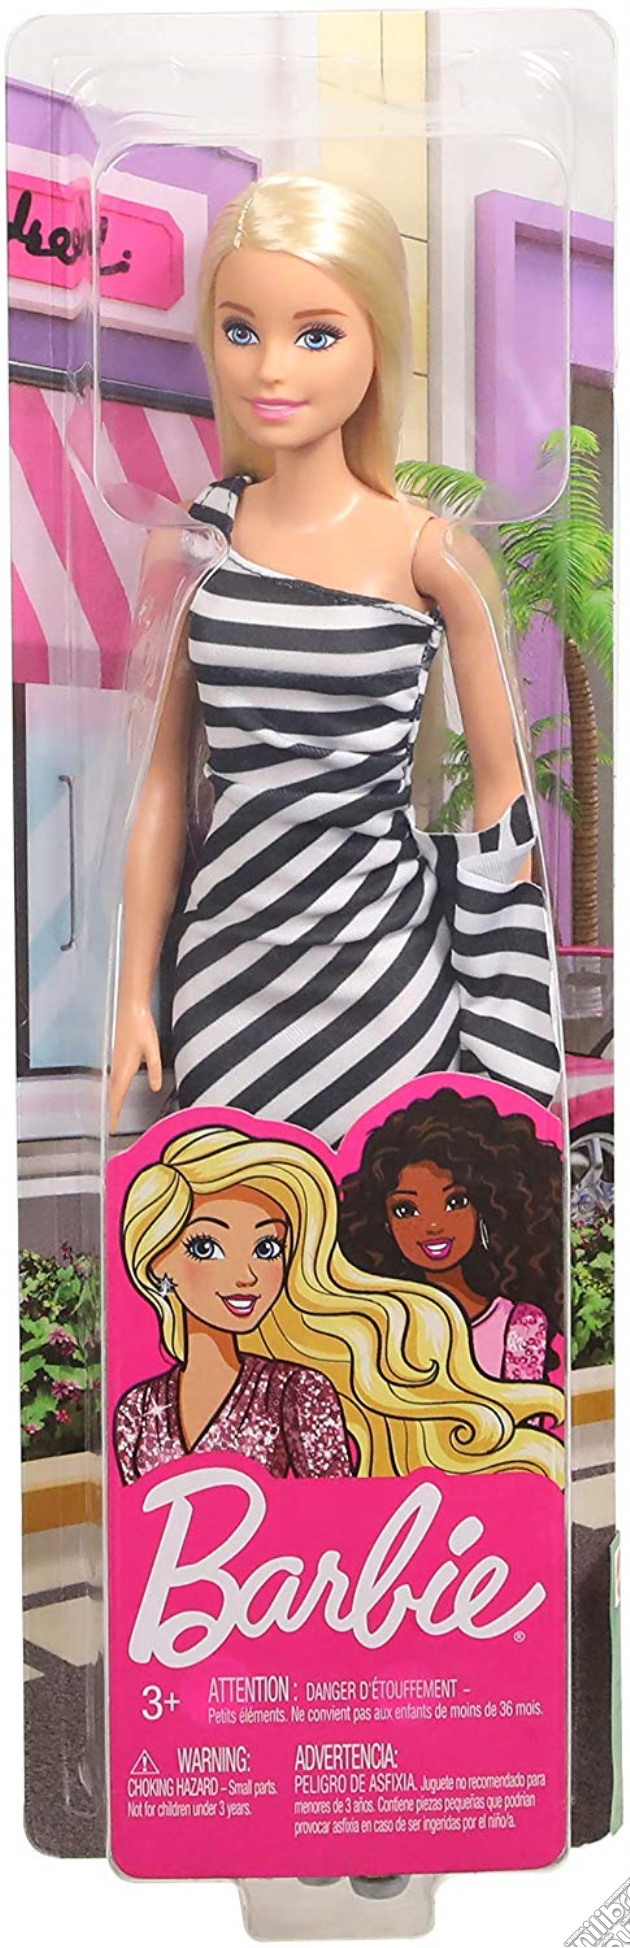 Barbie Glitz Bianca e Nera gioco di BAM